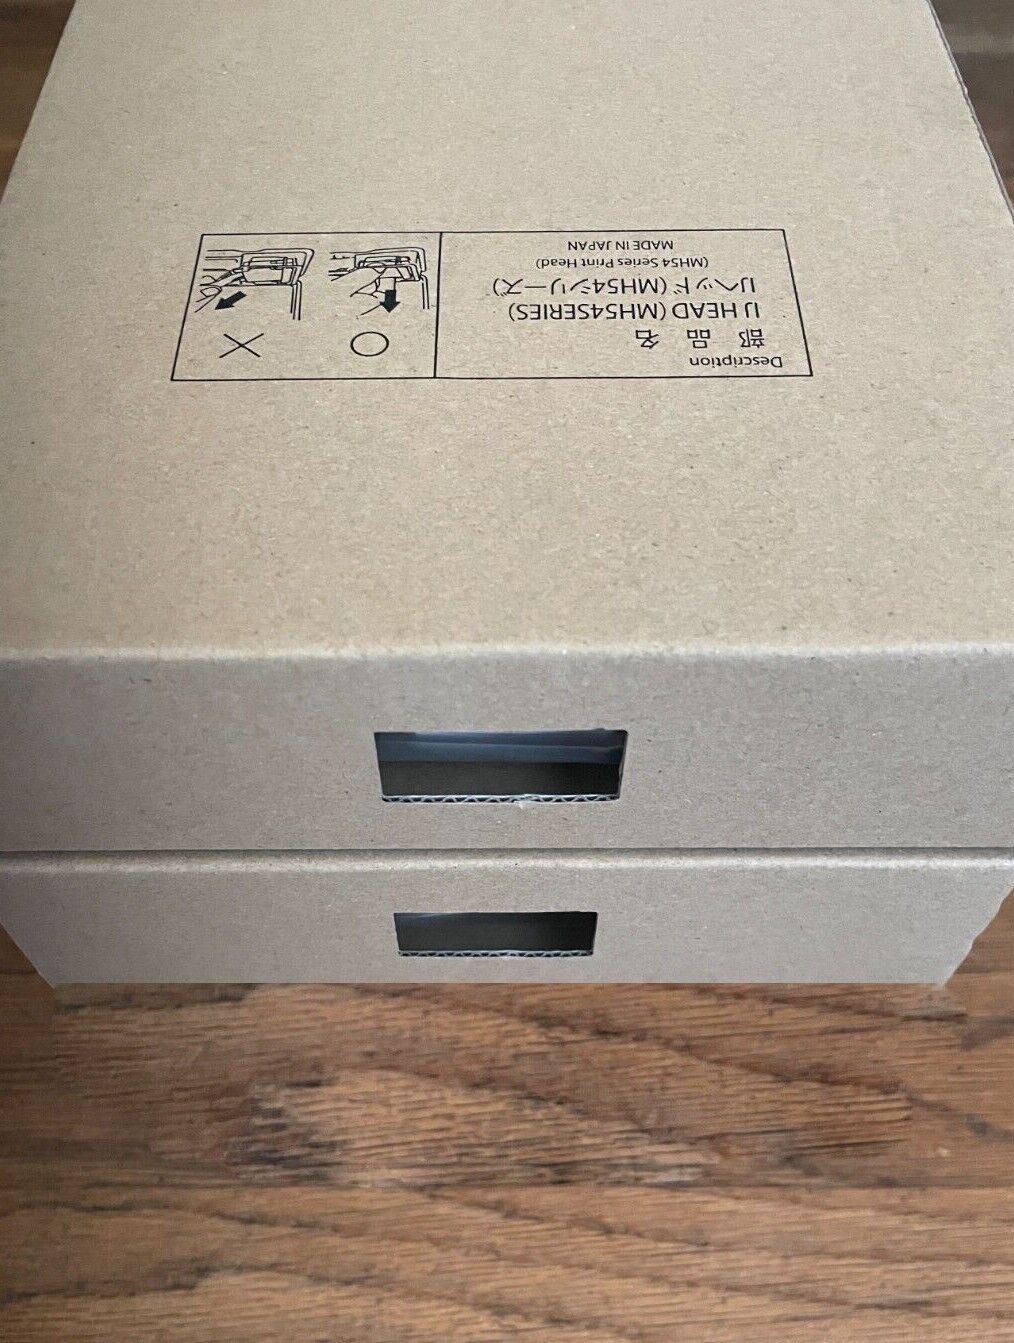 2x Genuine Ricoh GEN5 Printhead J36004- New in Box